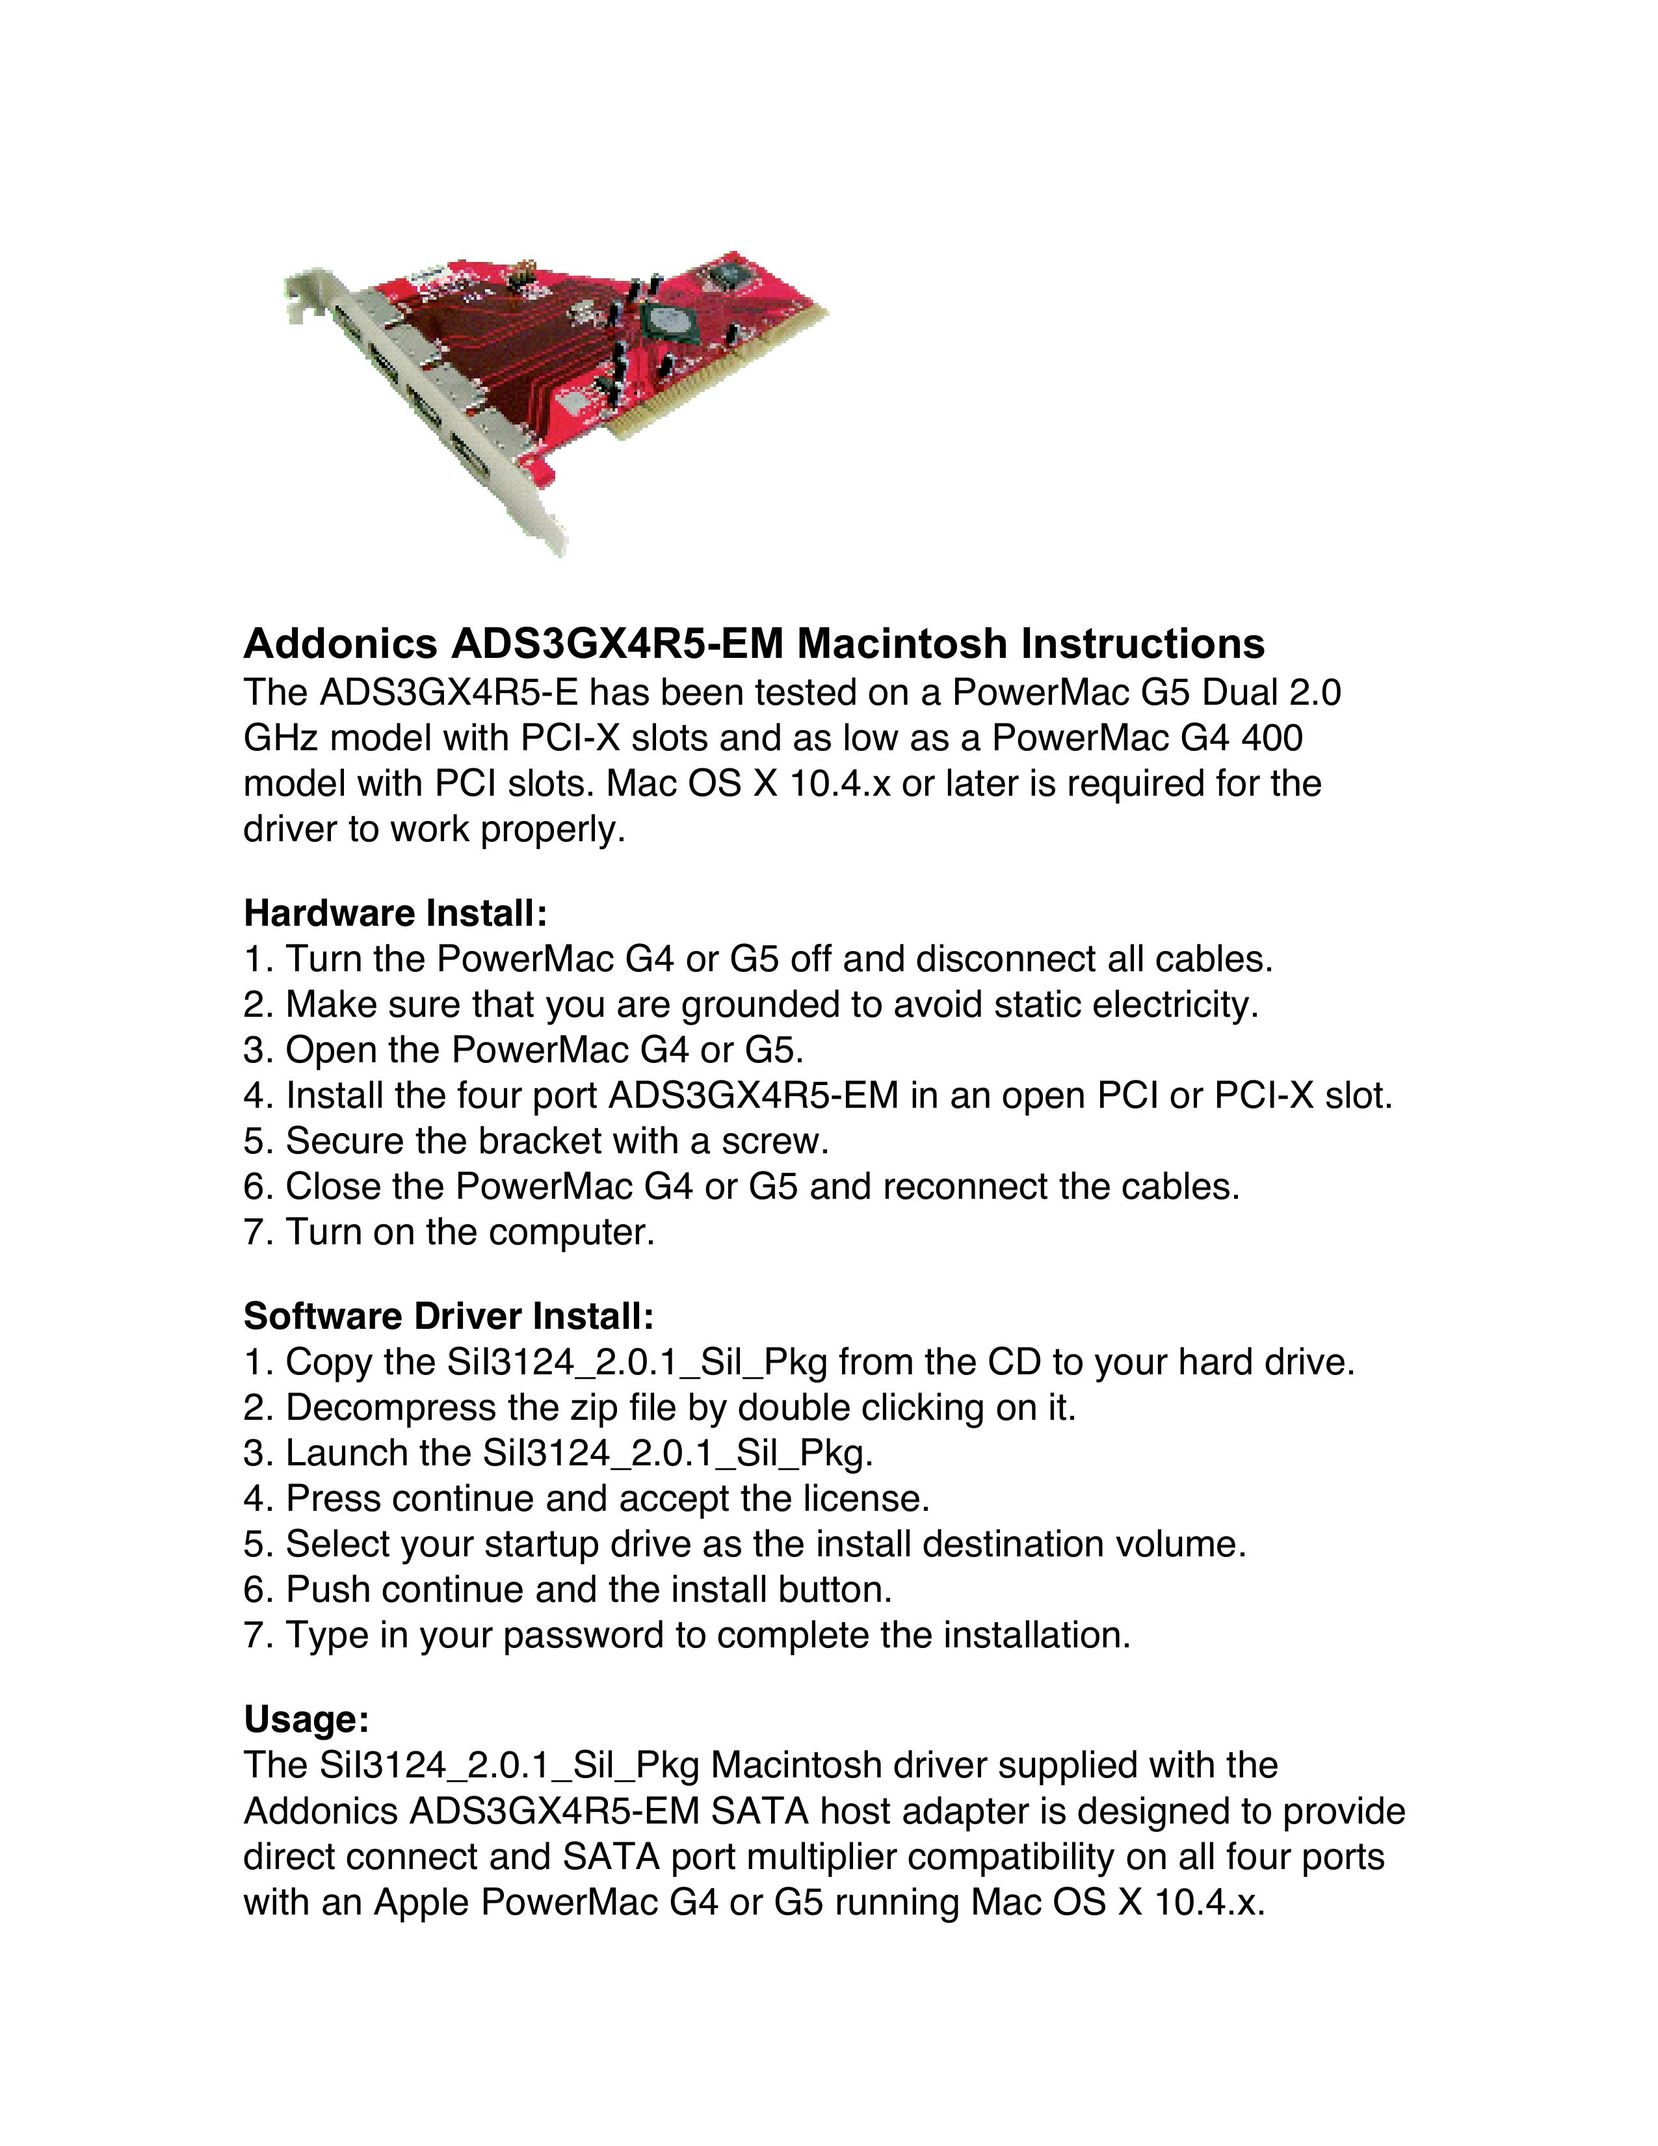 Addonics Technologies ADS3GX4R5-EM Computer Drive User Manual